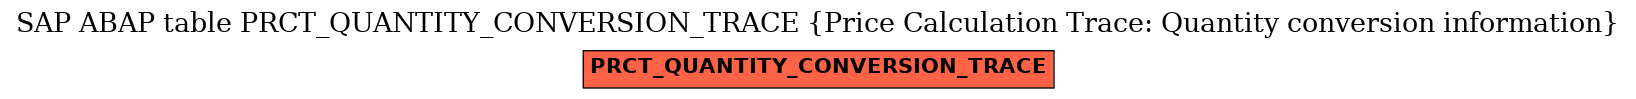 E-R Diagram for table PRCT_QUANTITY_CONVERSION_TRACE (Price Calculation Trace: Quantity conversion information)